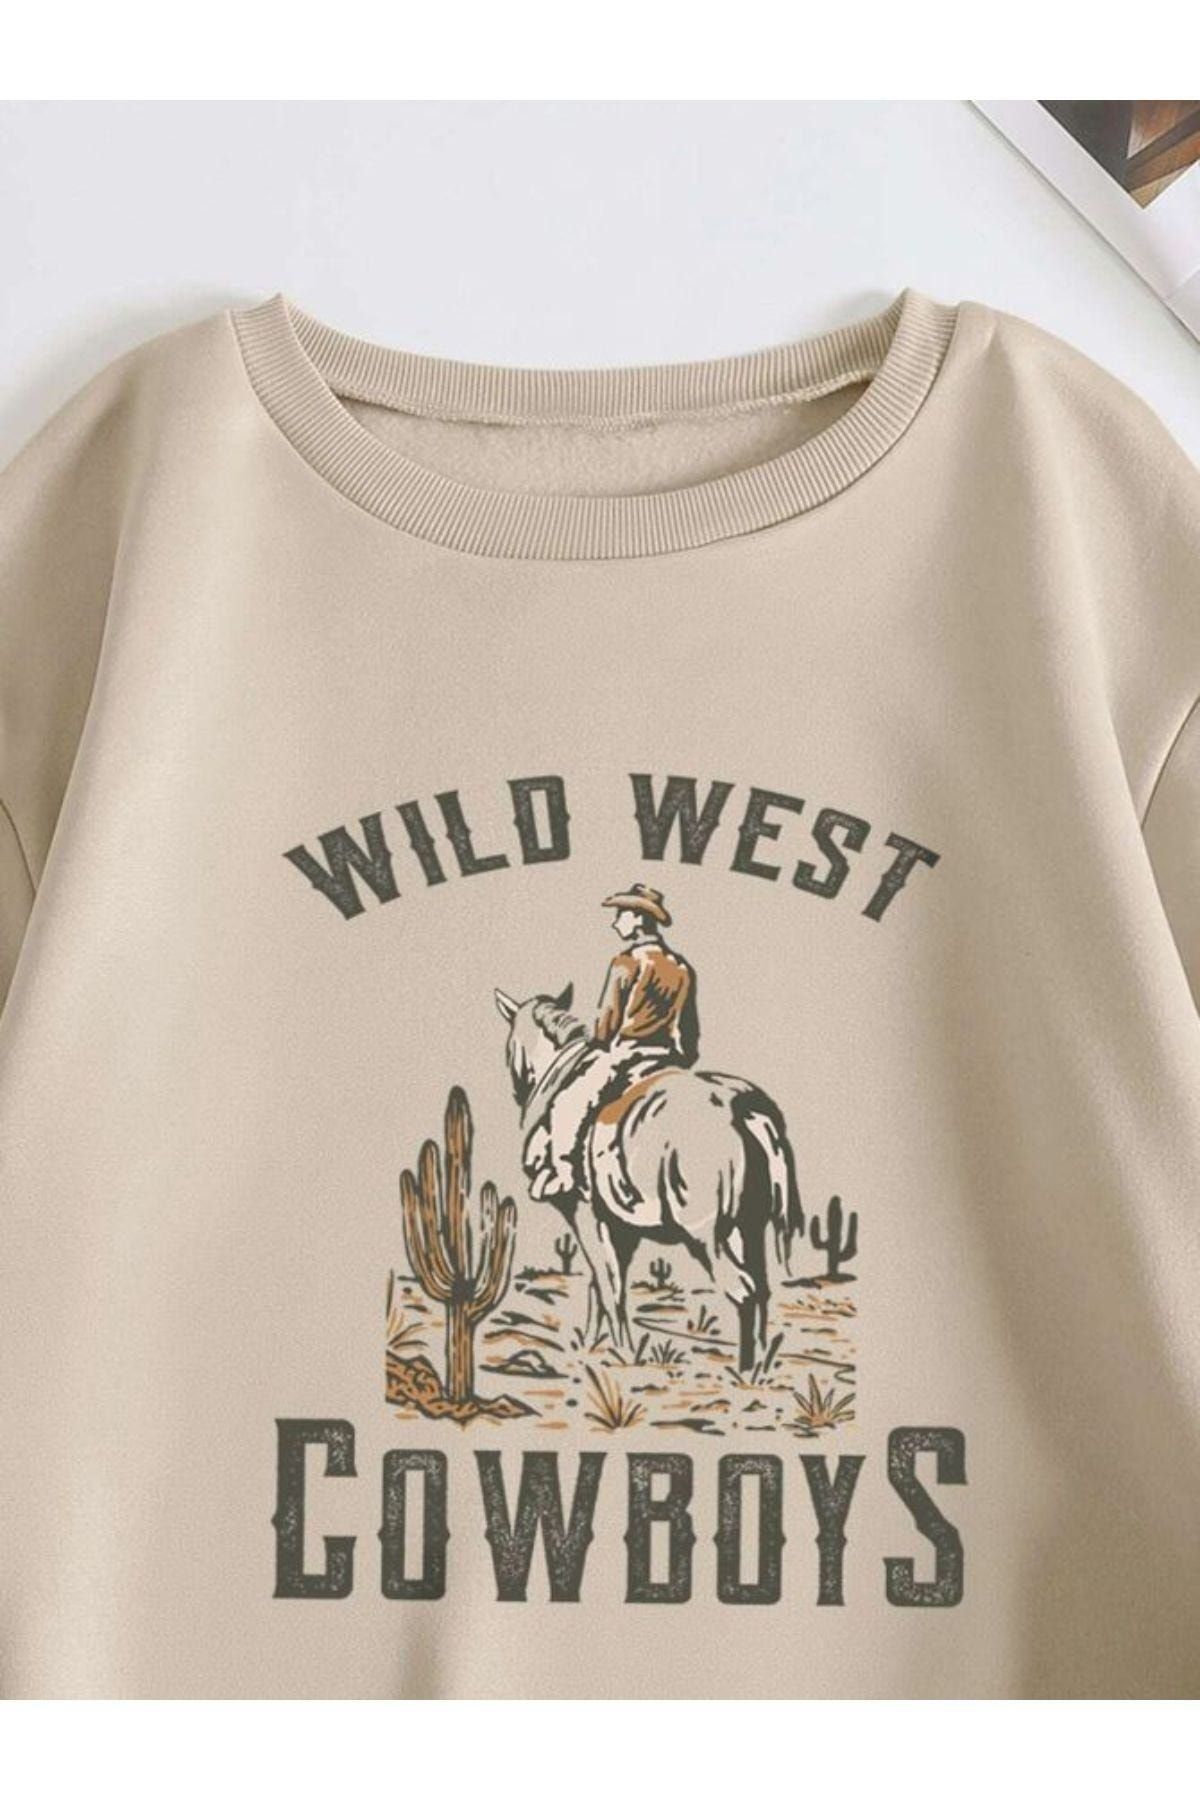 Wild West cowboys crewneck